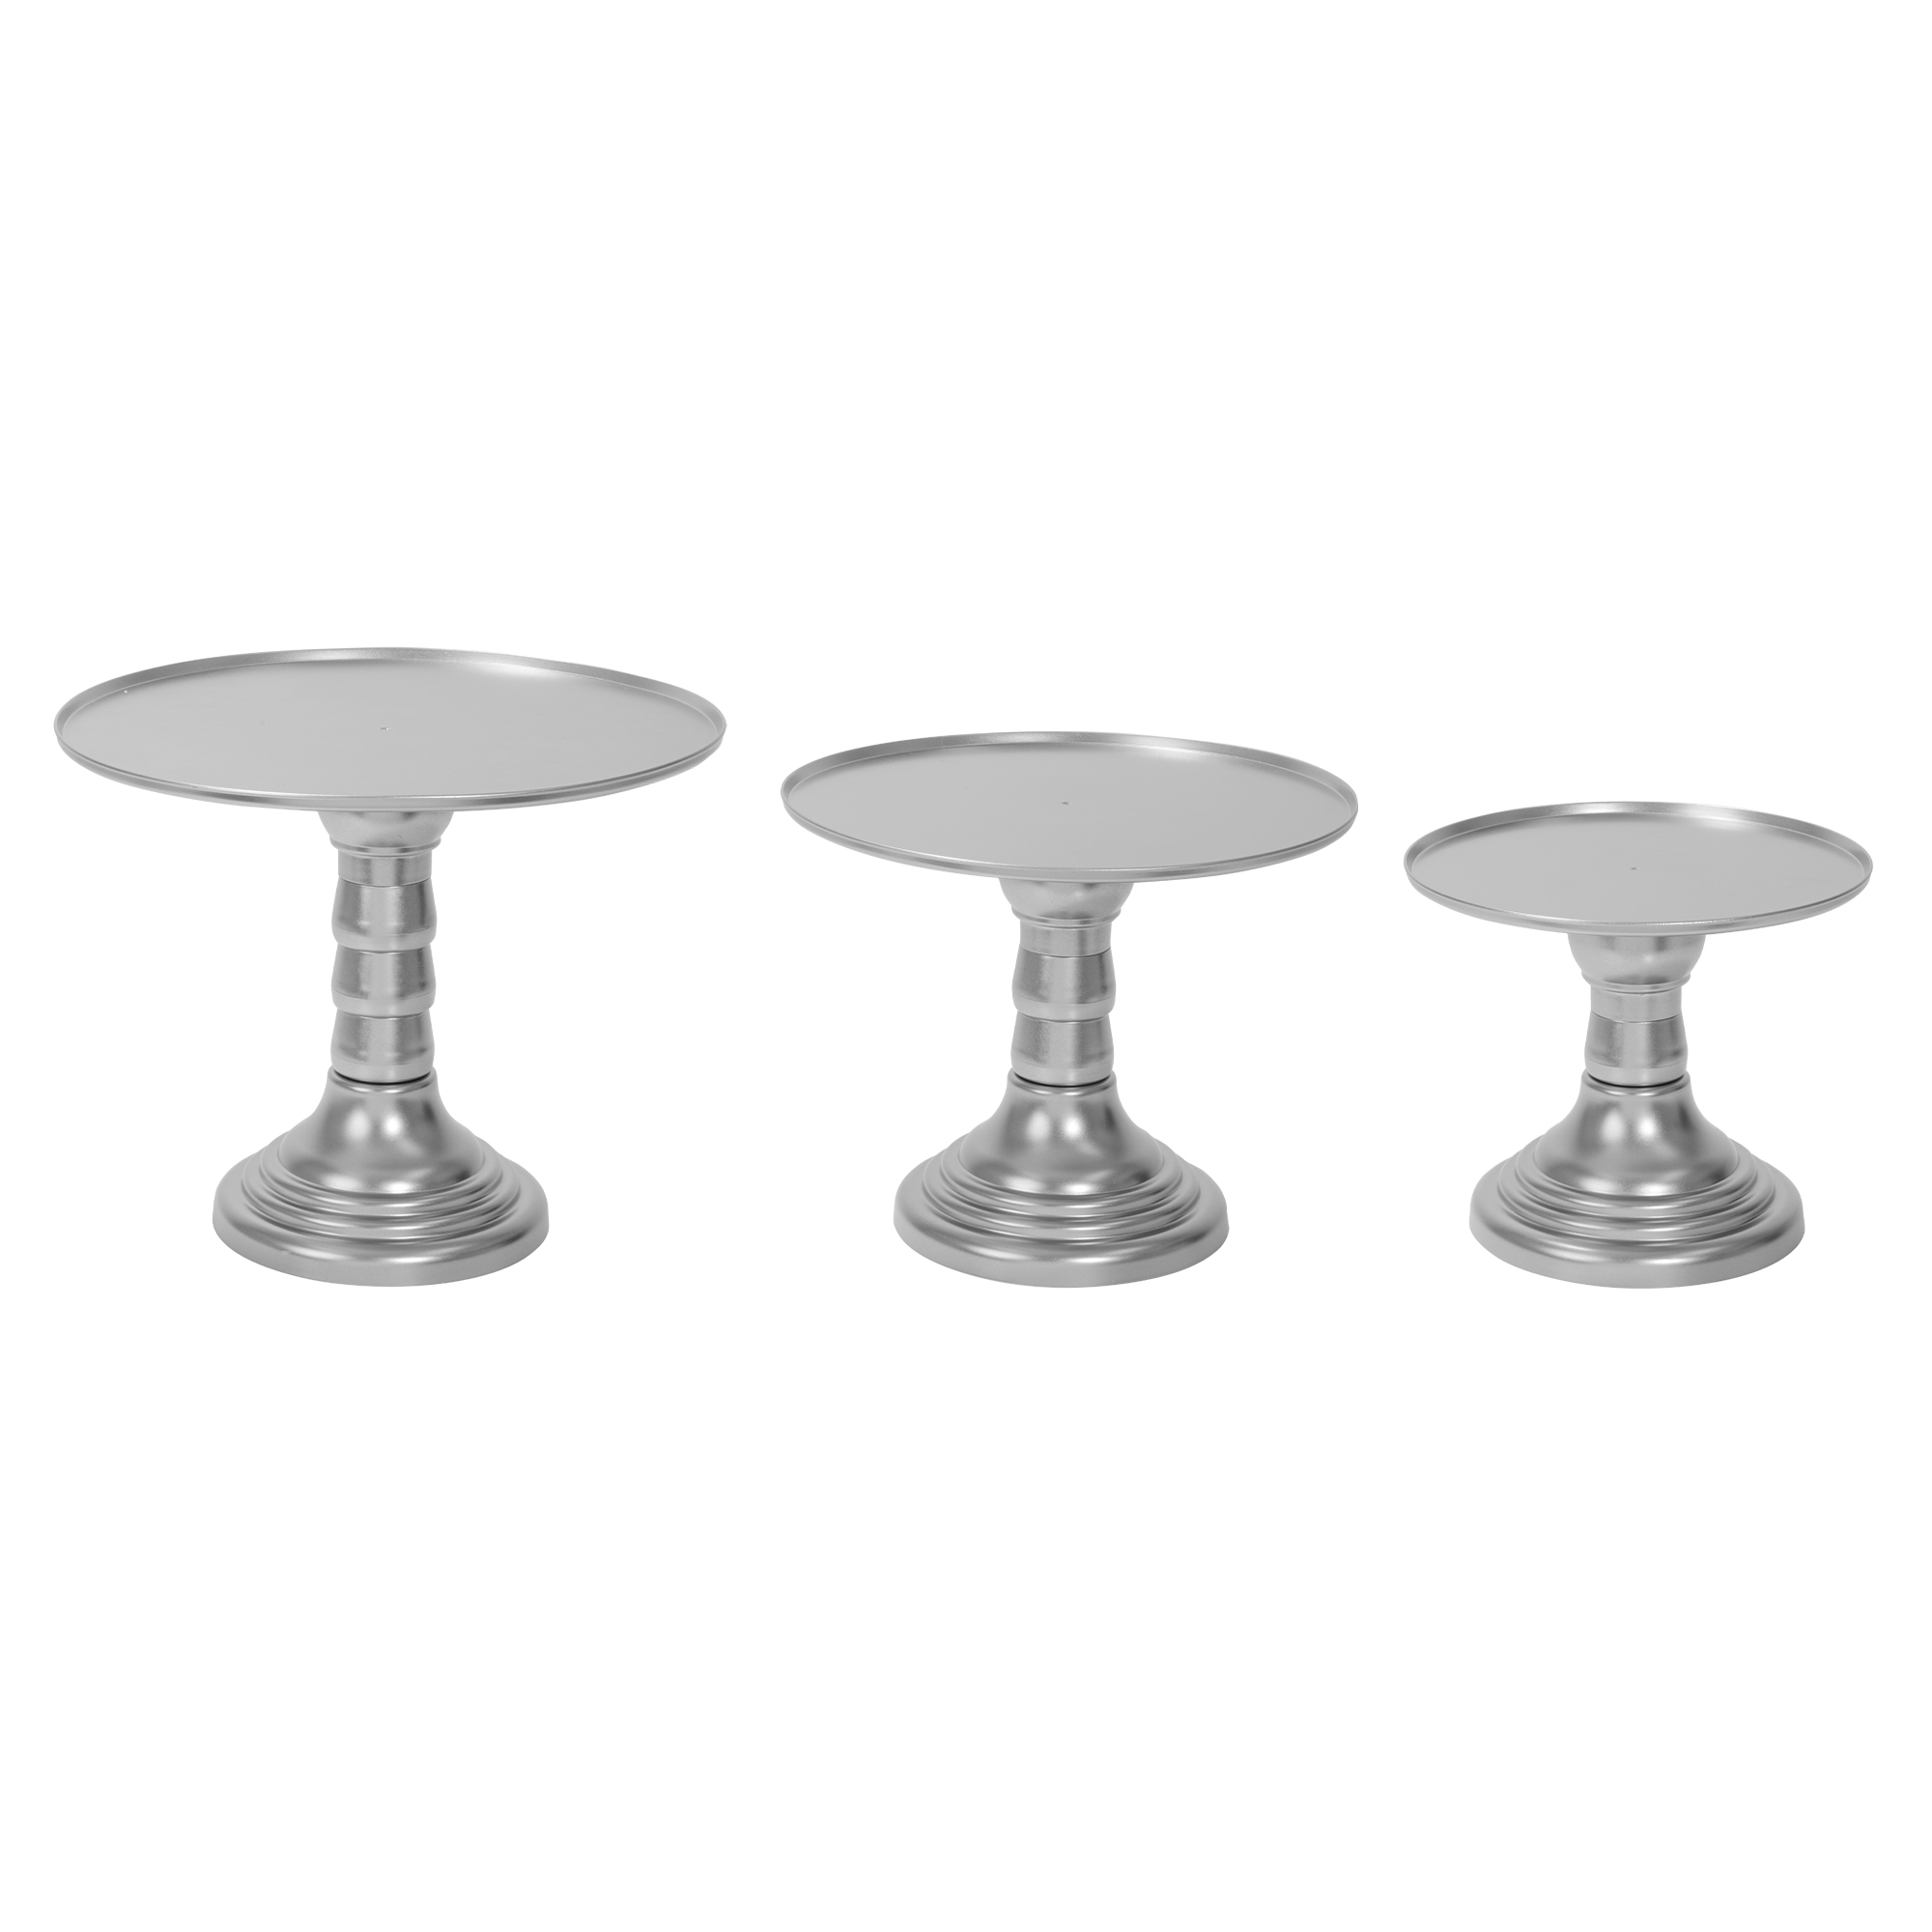 Plastic Cake Stand Pedestals 3pc/set - Silver